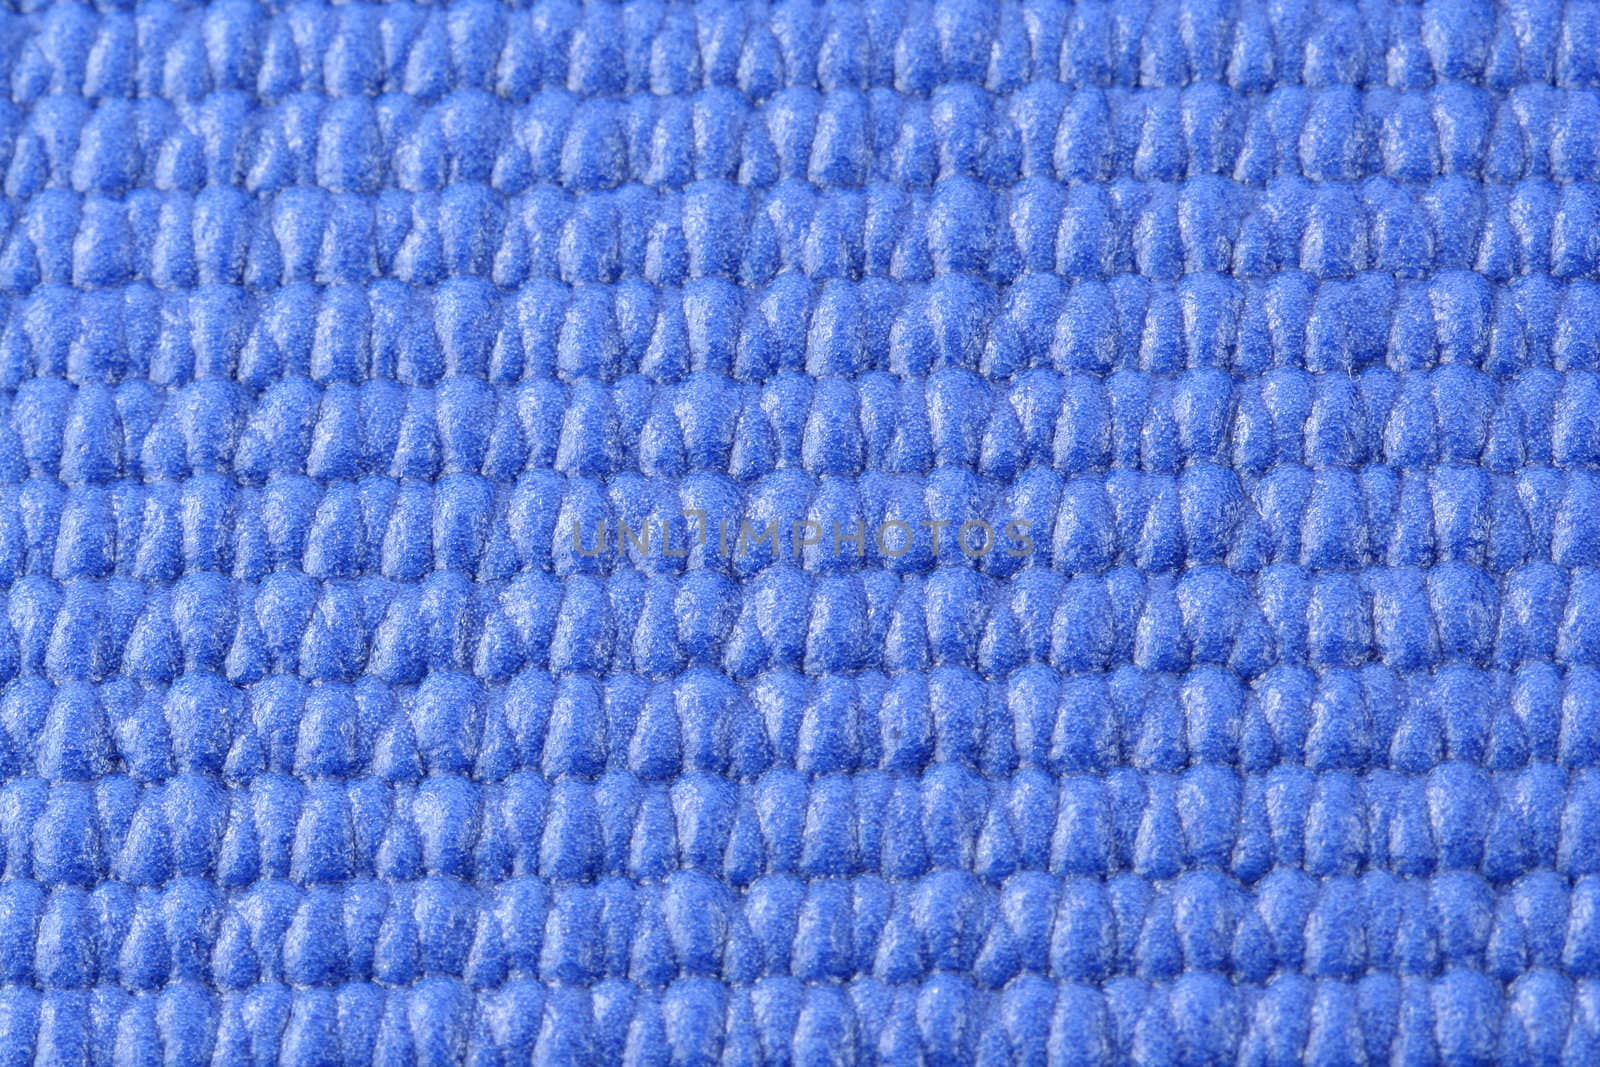 A Macro view of a blue yoga mat